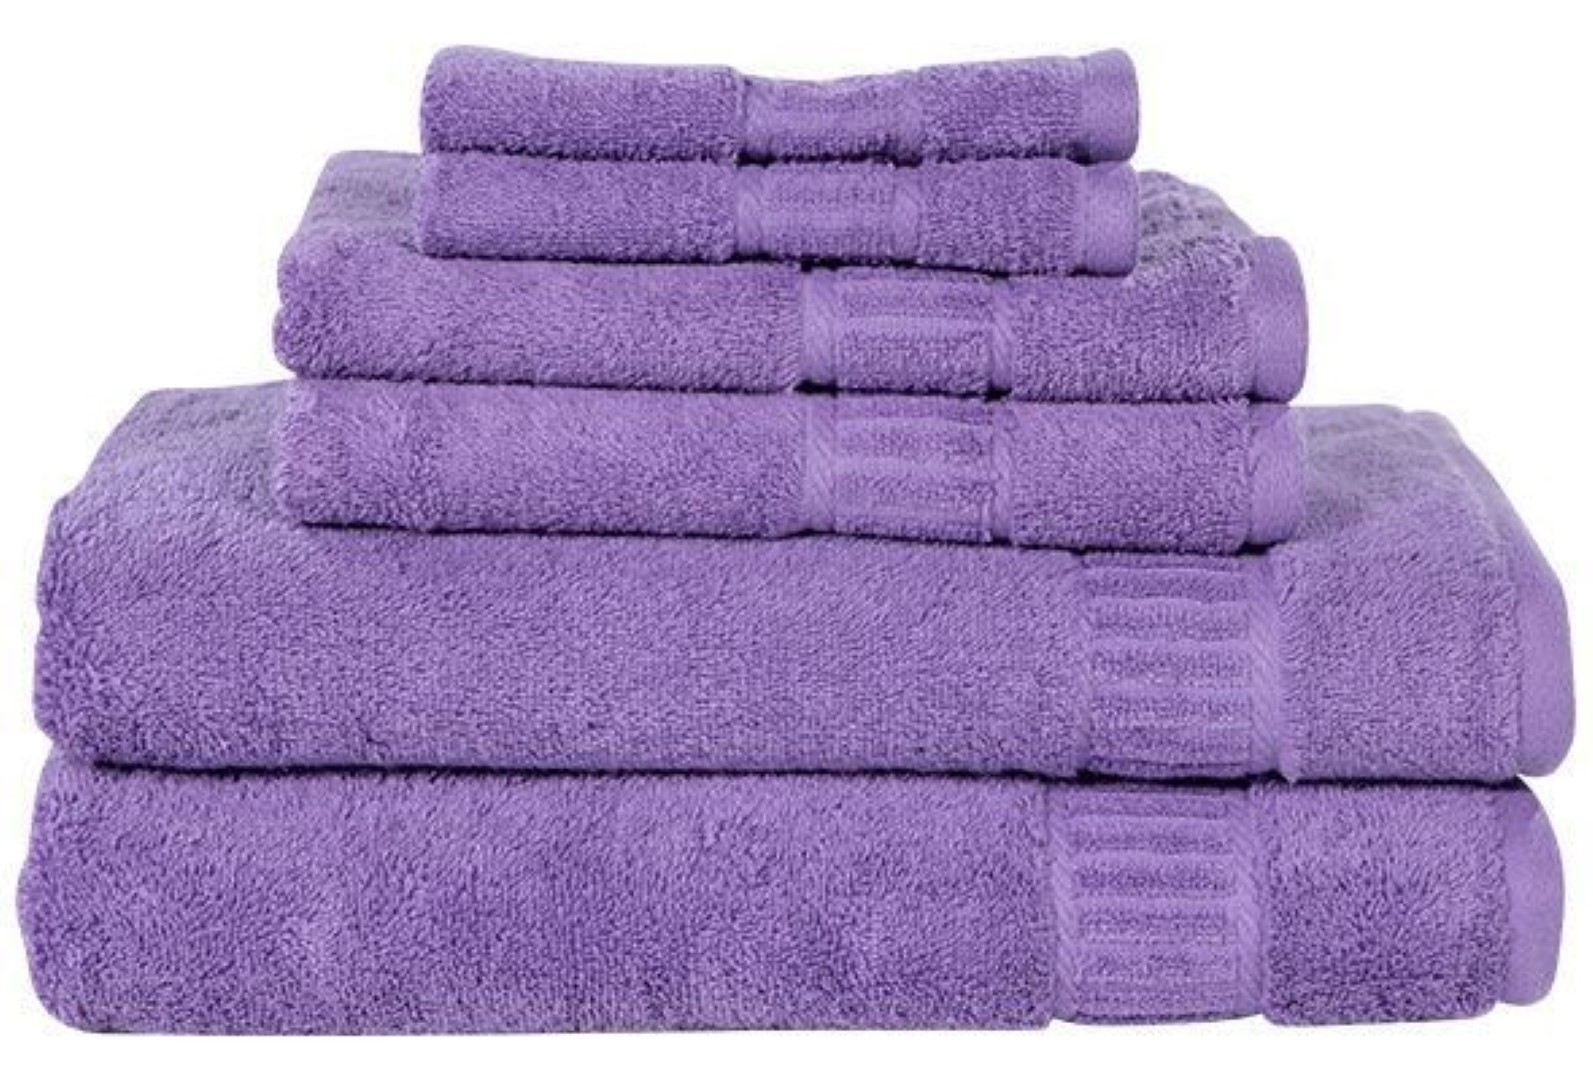 https://chaneydistributors.com/wp-content/uploads/2022/01/MyPillow-Towel-Set-Royal-Purple.jpg